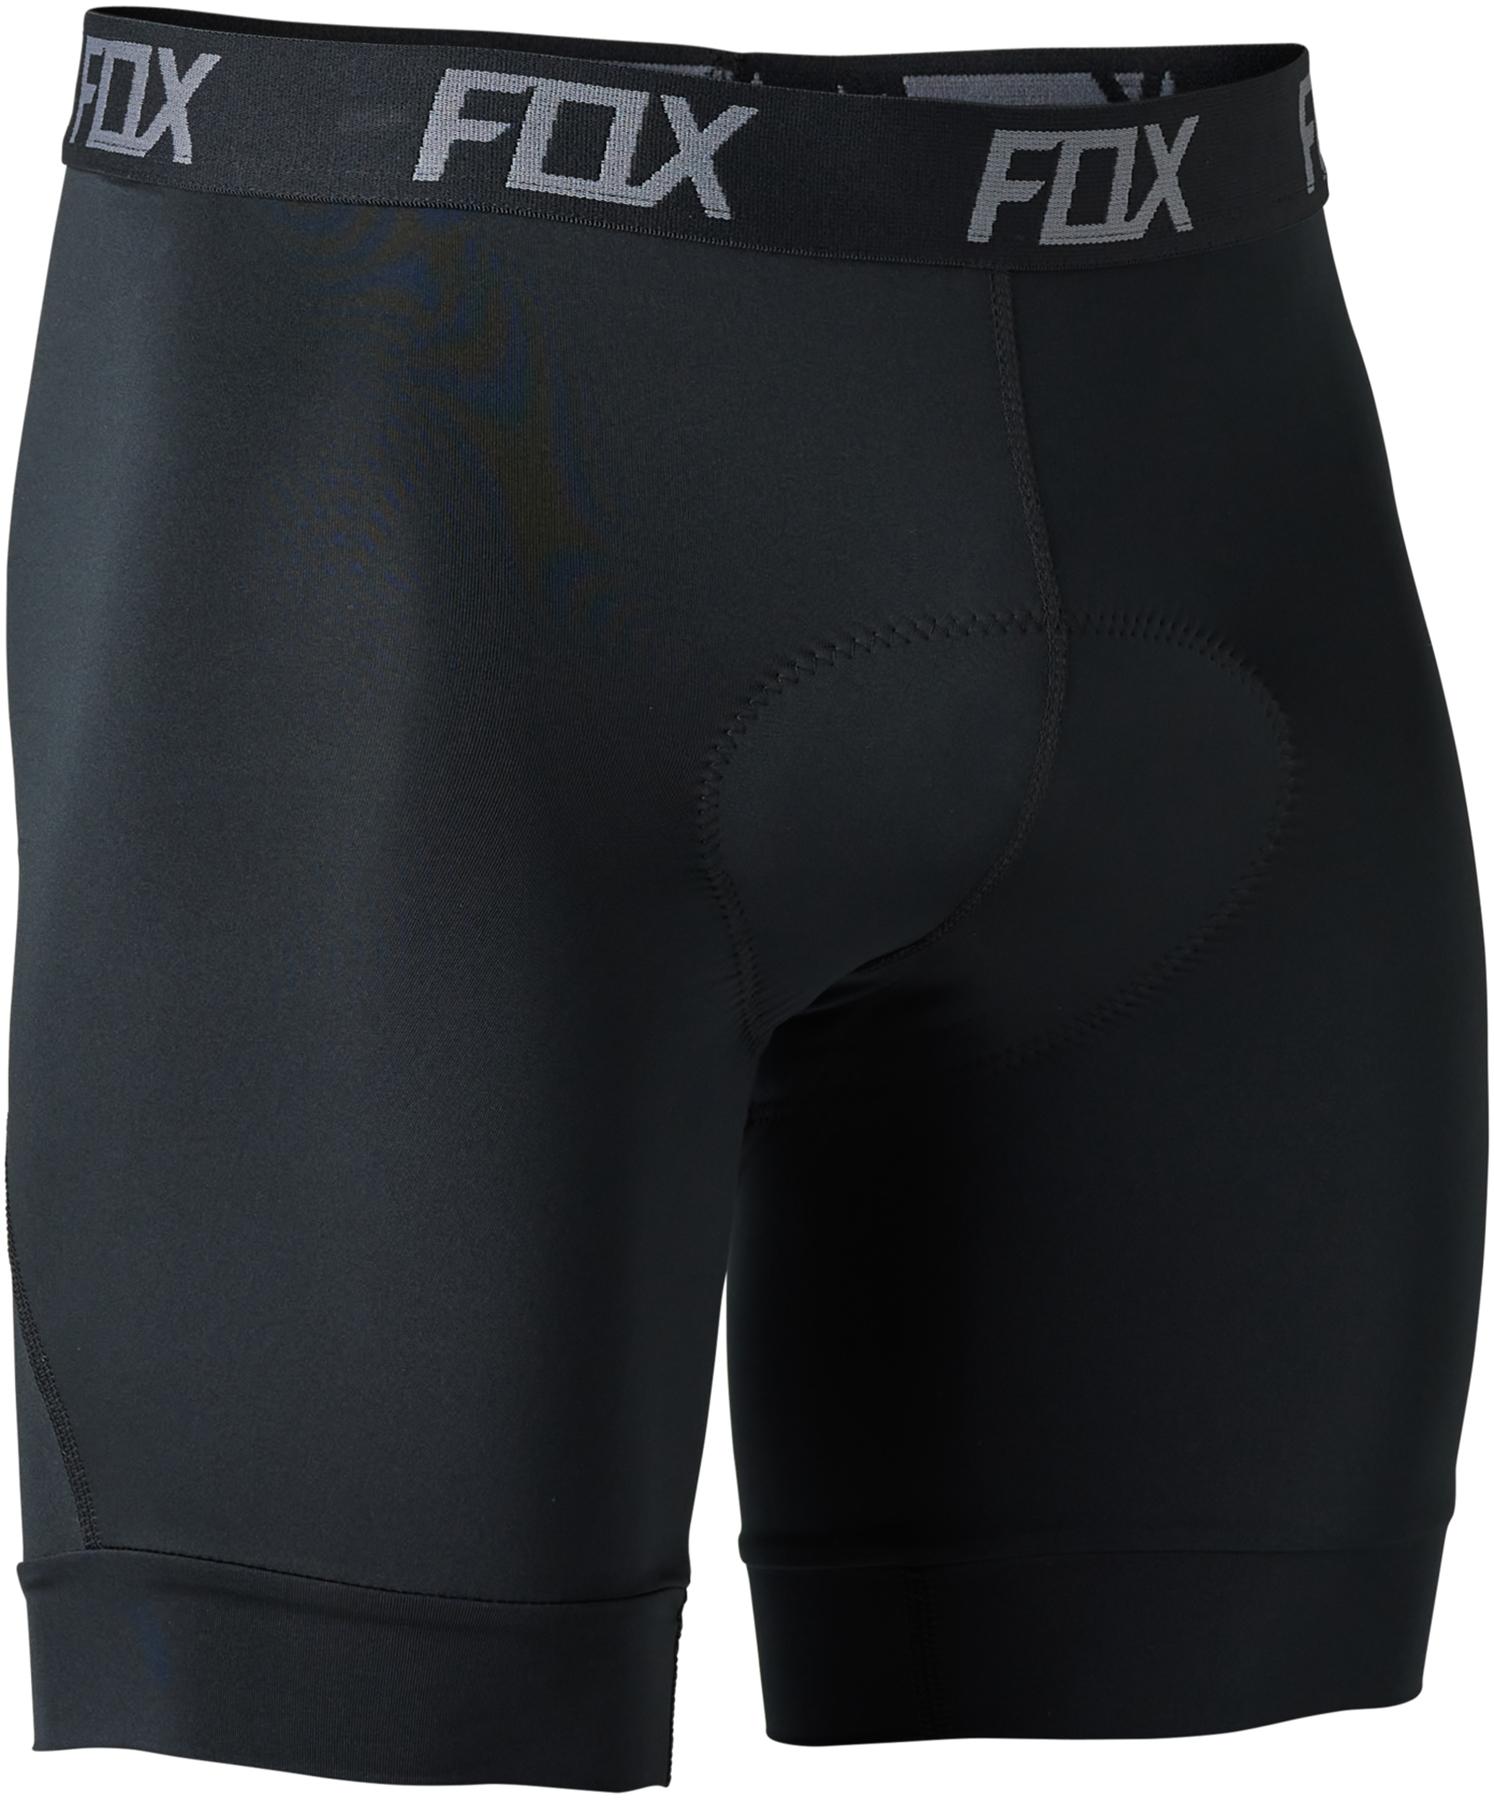 Fox Racing Tecbase Liner Lite Cycle Shorts - Black